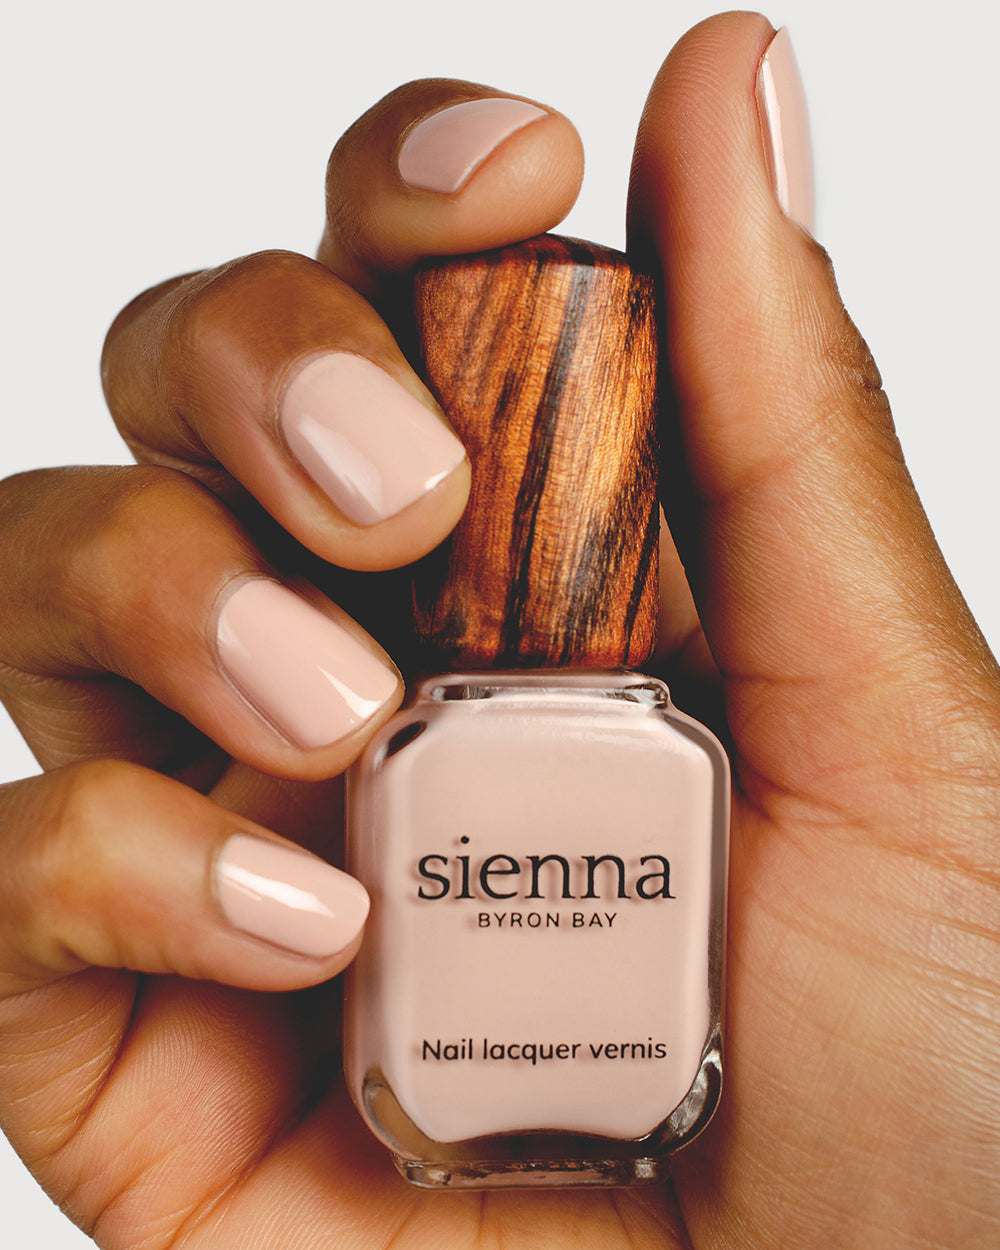 soft neutral-pink nail polish hand swatch on medium skin tone holding sienna bottle up close